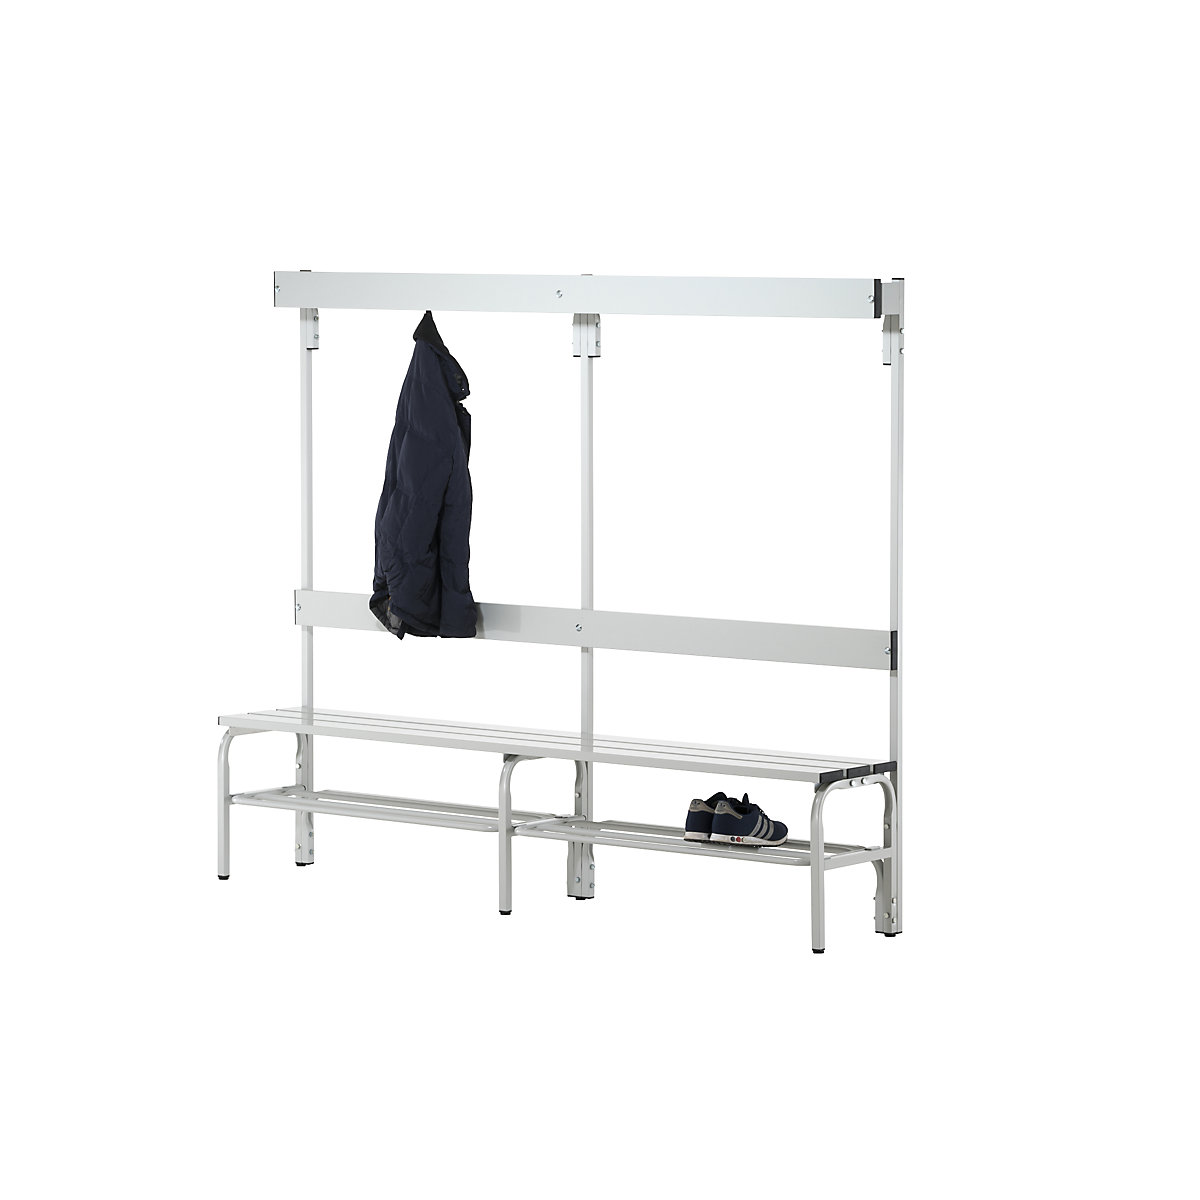 Sypro – Changing room bench with aluminium slats (Product illustration 15)